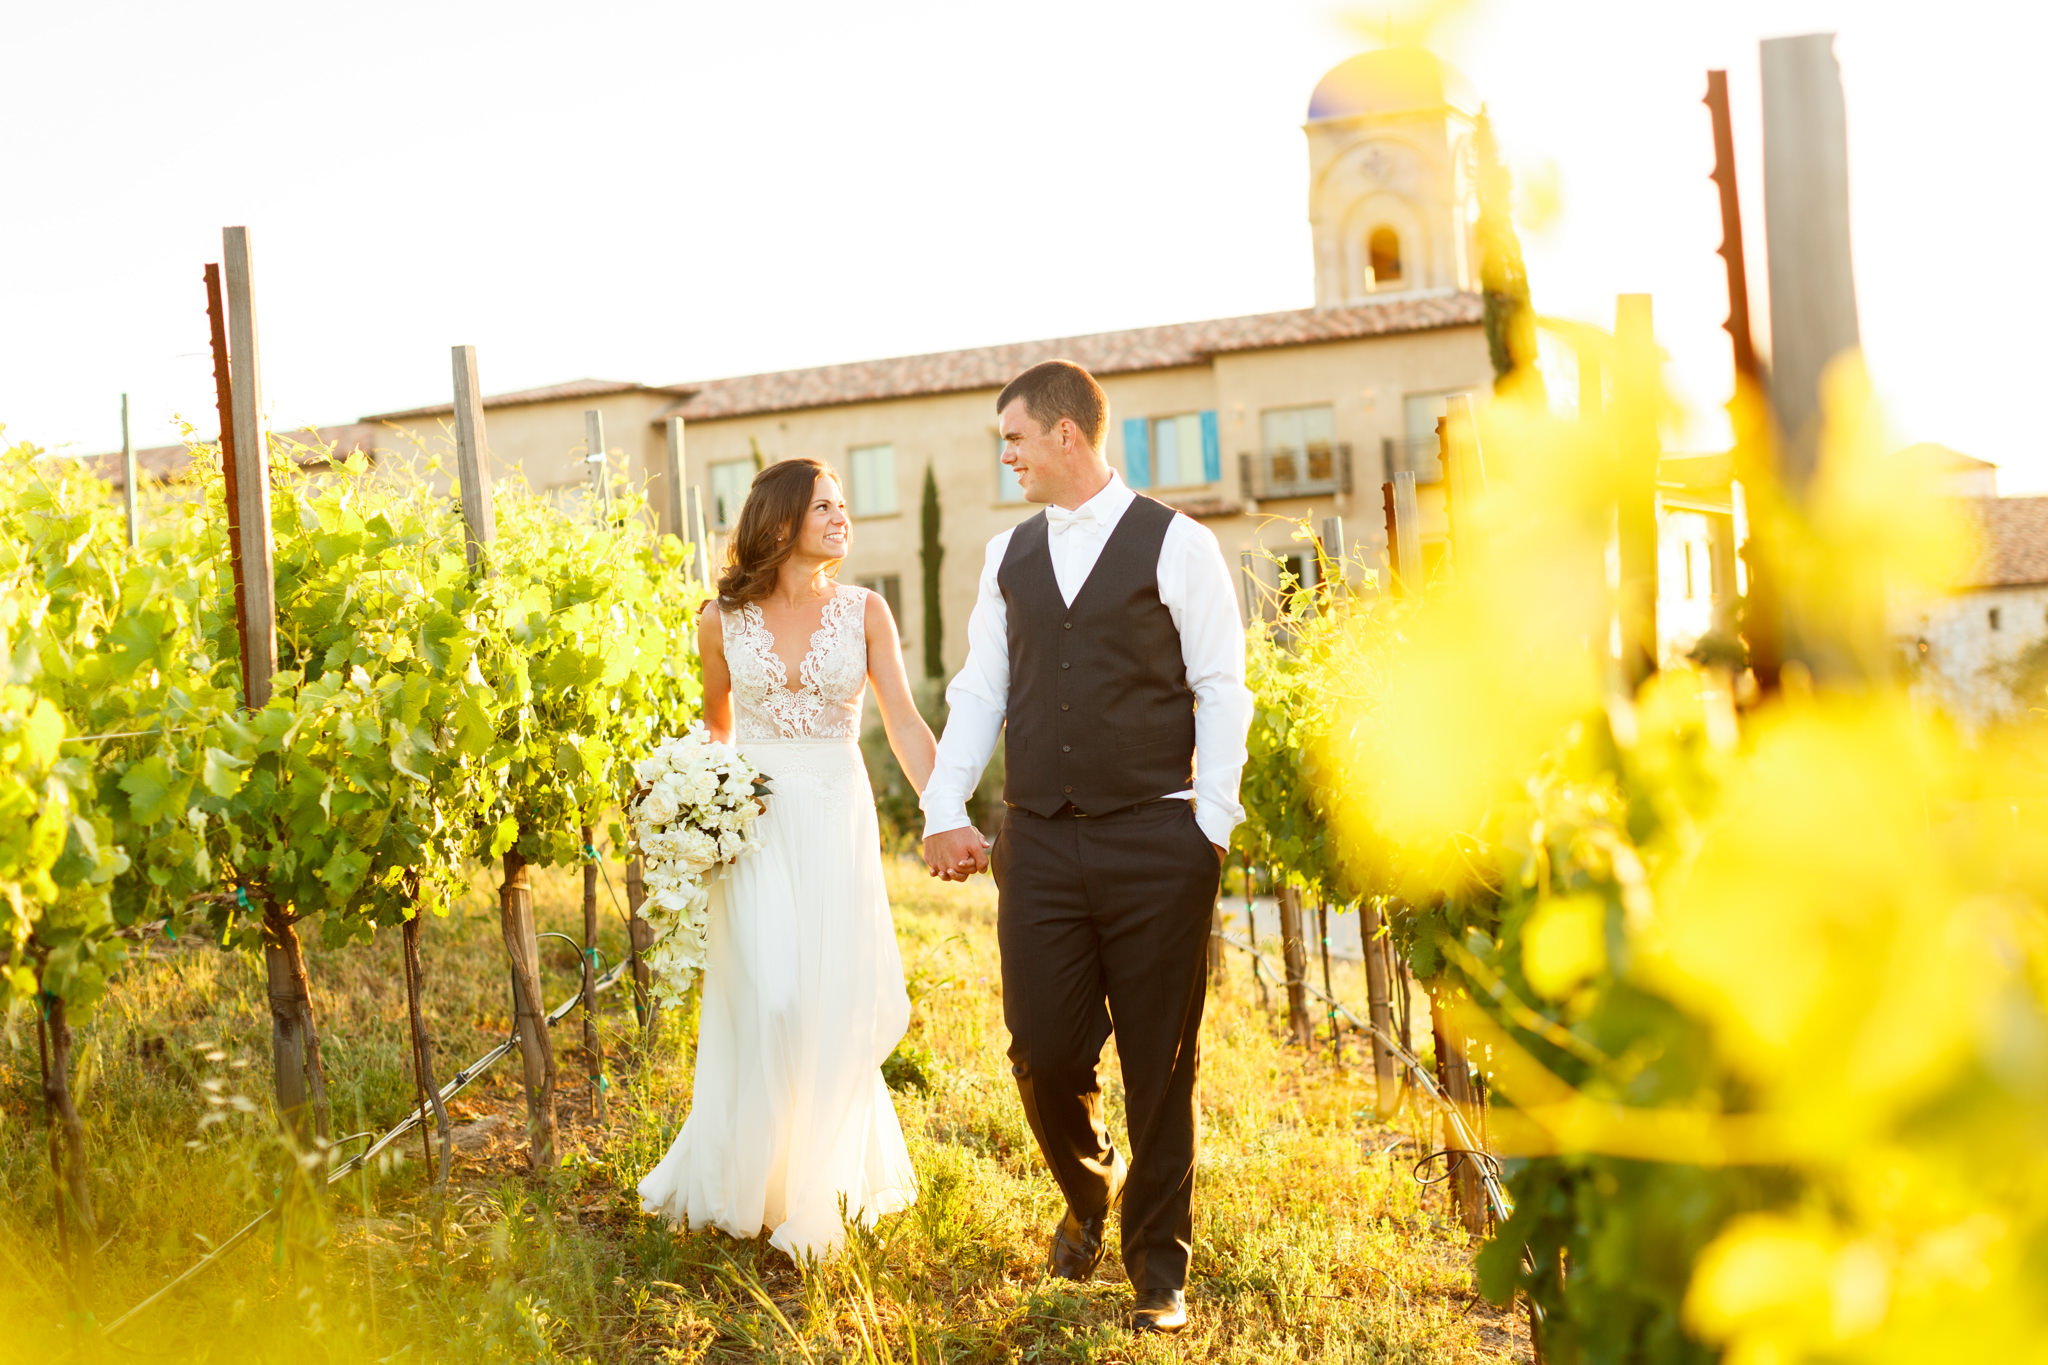 Central Coast Vineyard Wedding Venues - Allegretto Vineyard